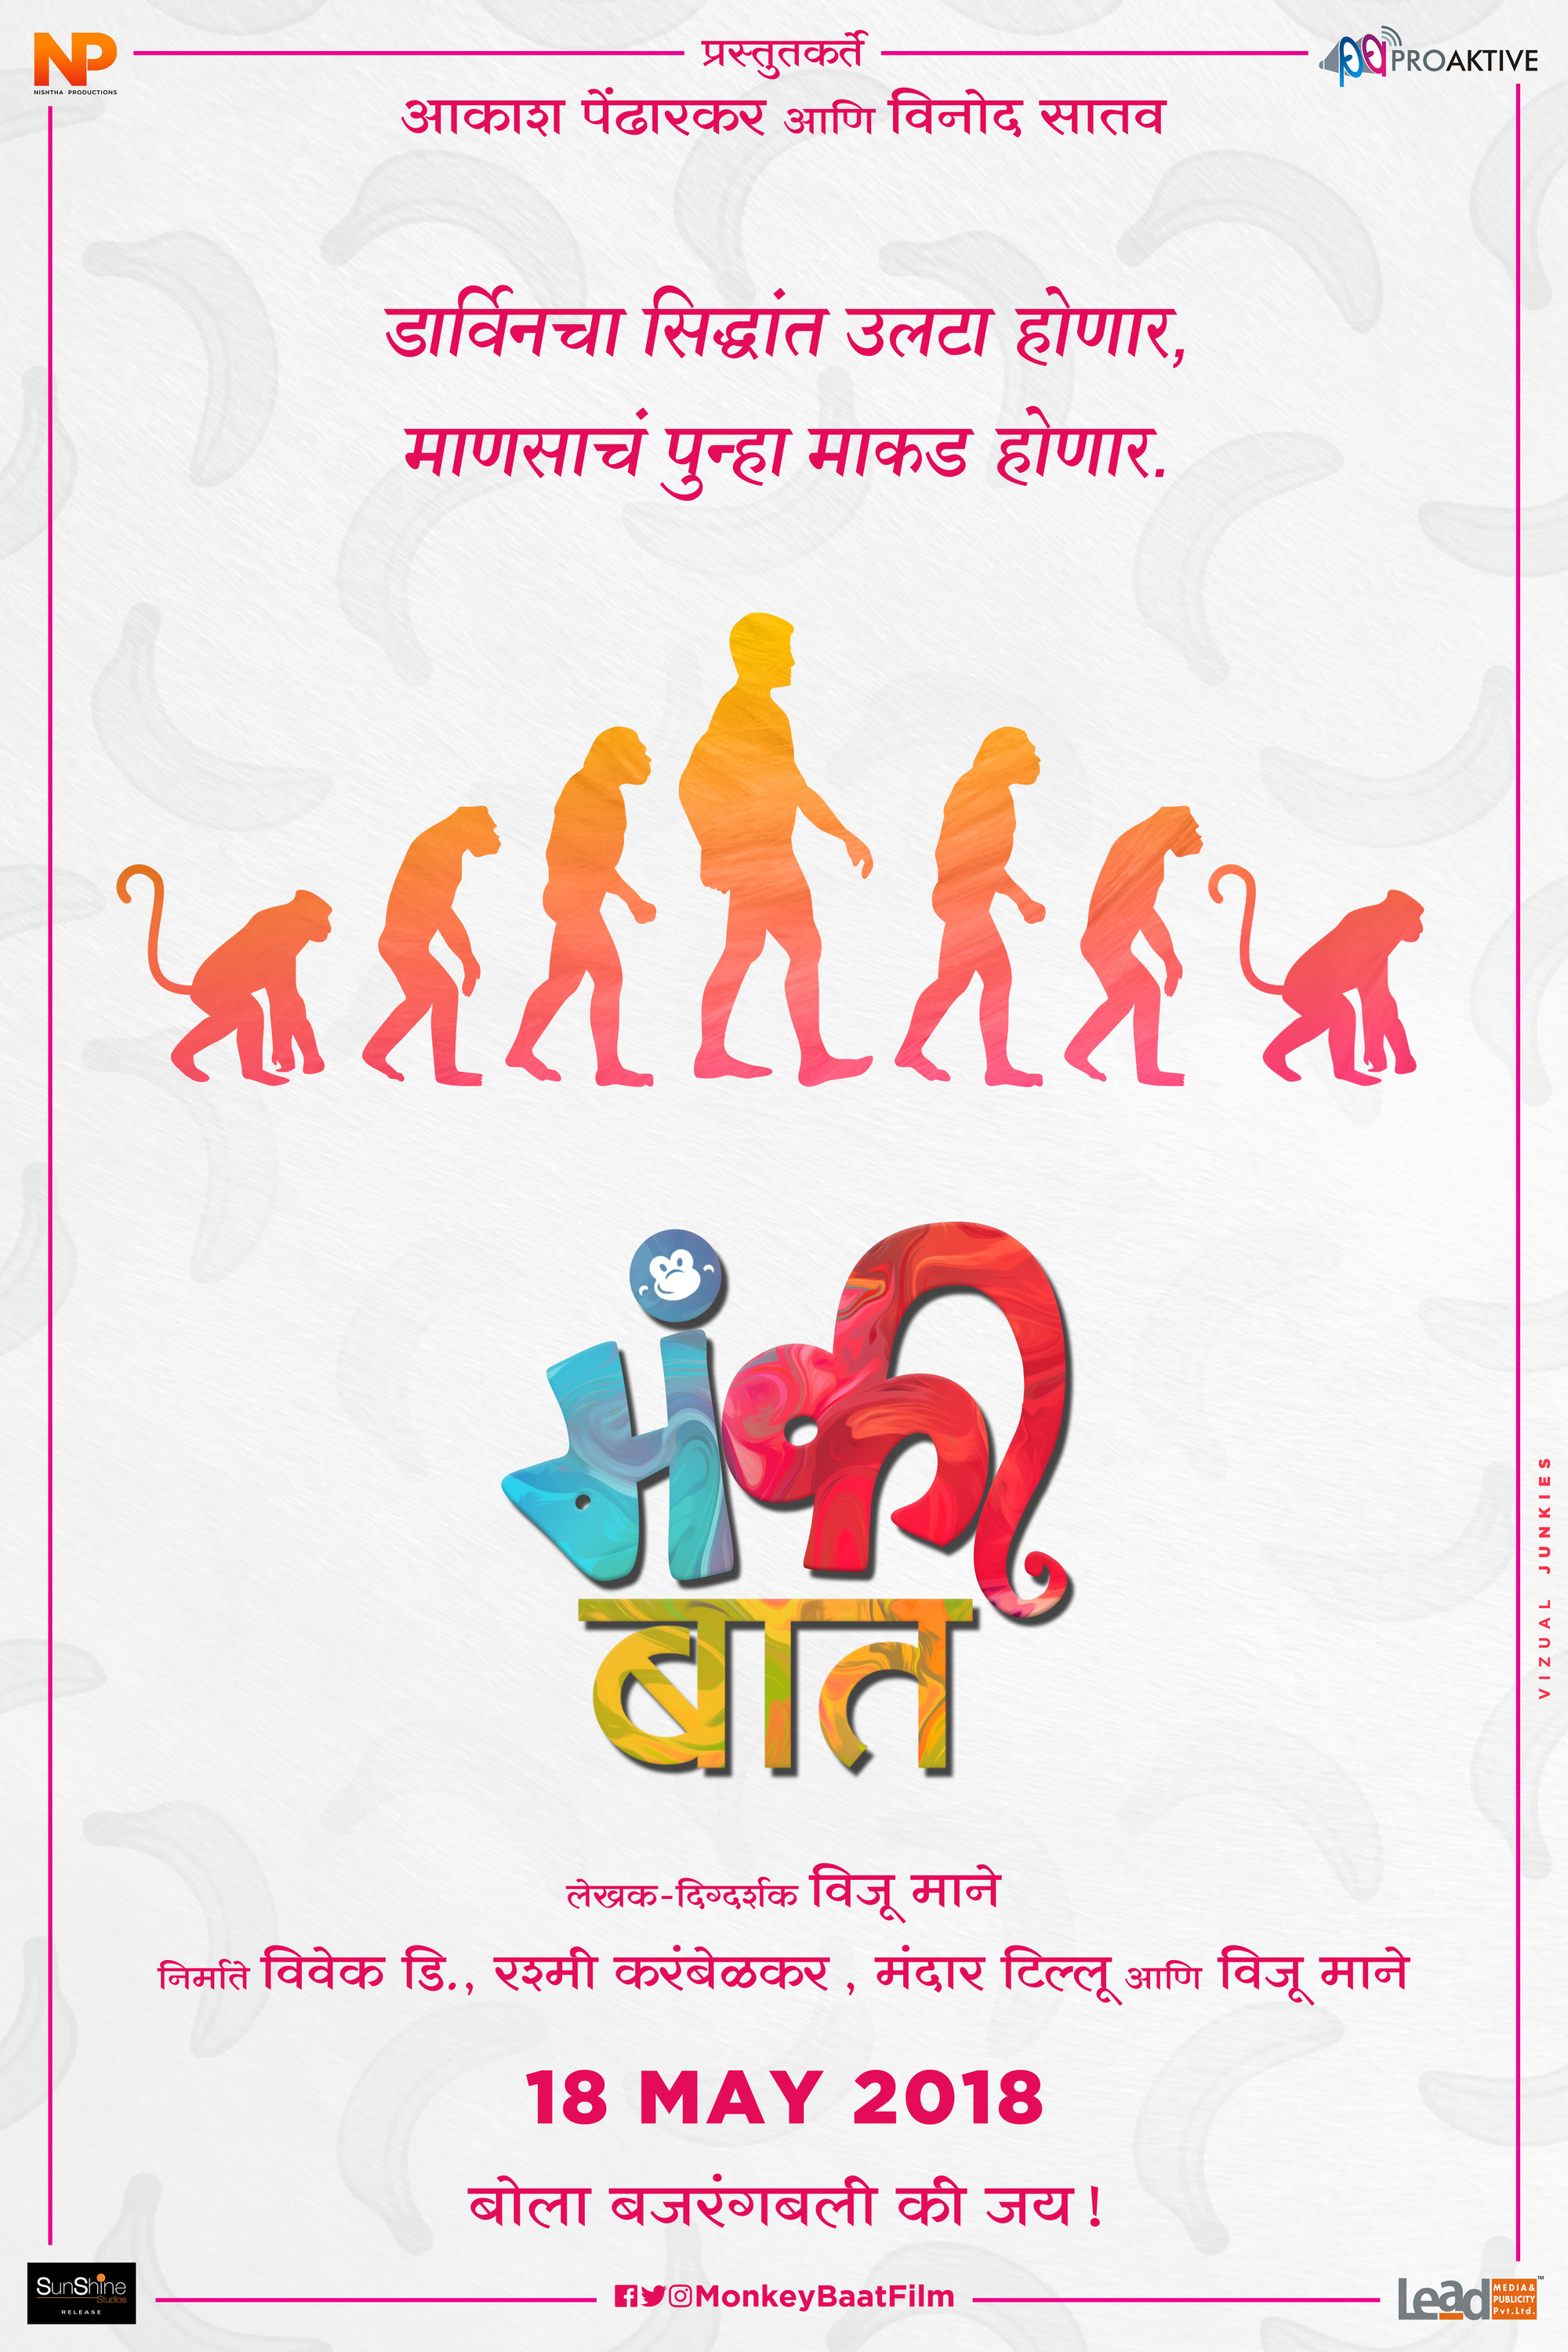 Mega Sized Movie Poster Image for Monkey Baat (#2 of 4)